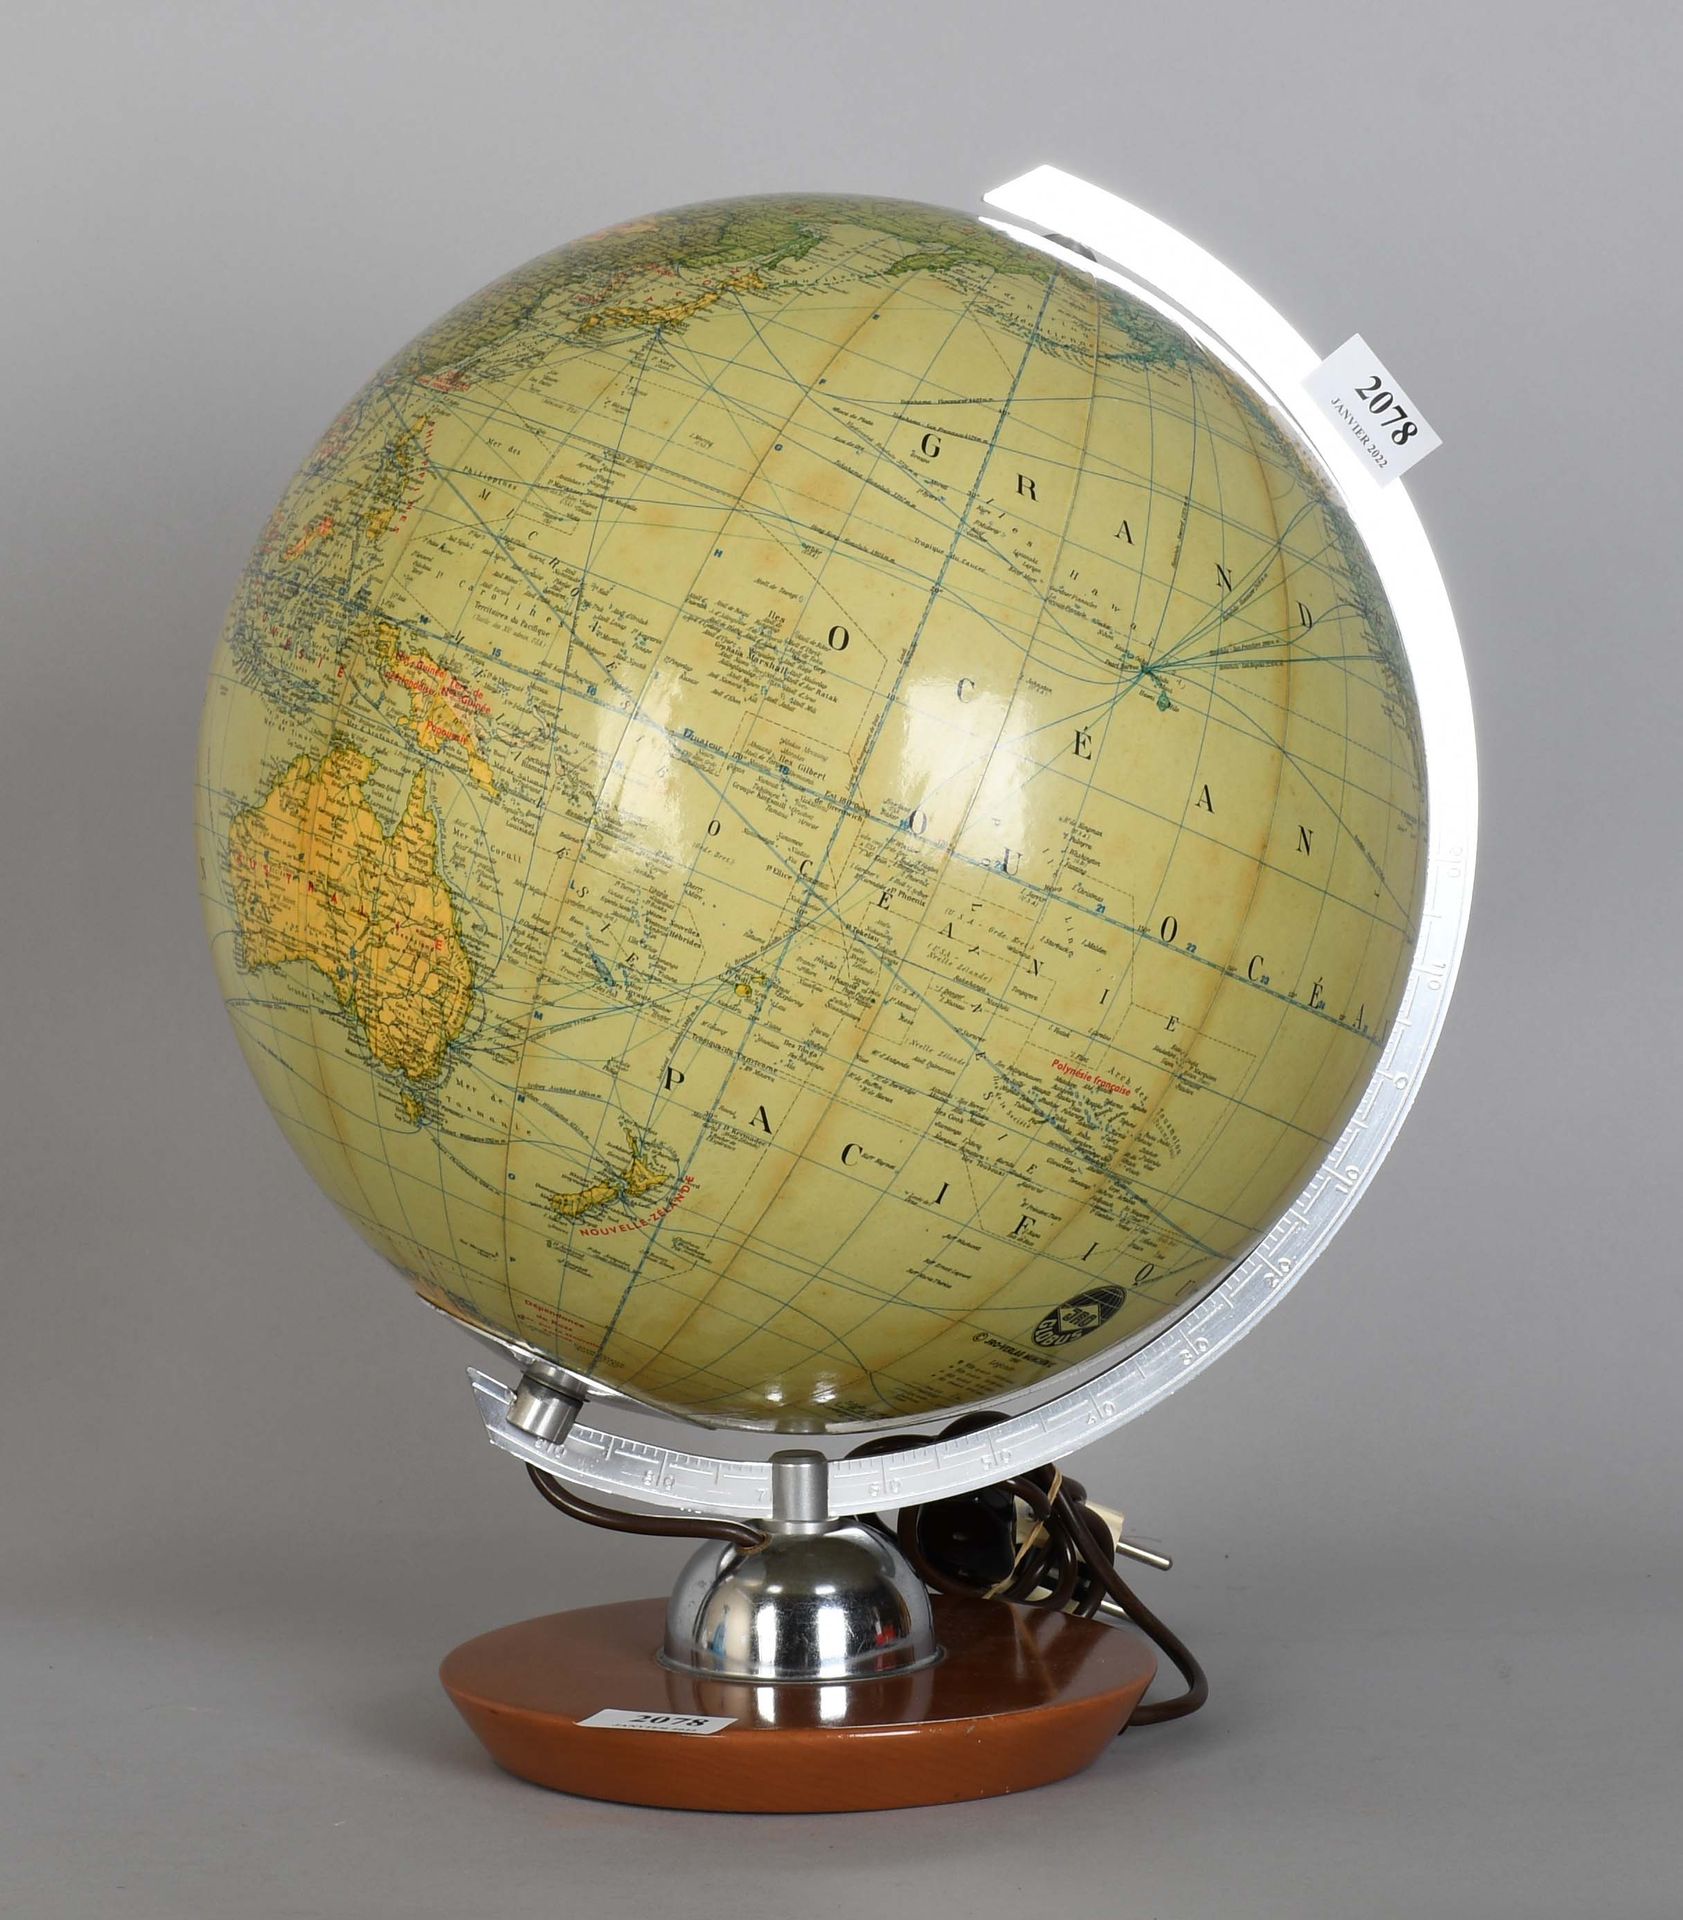 Null JRO / 1961

发光的玻璃球。